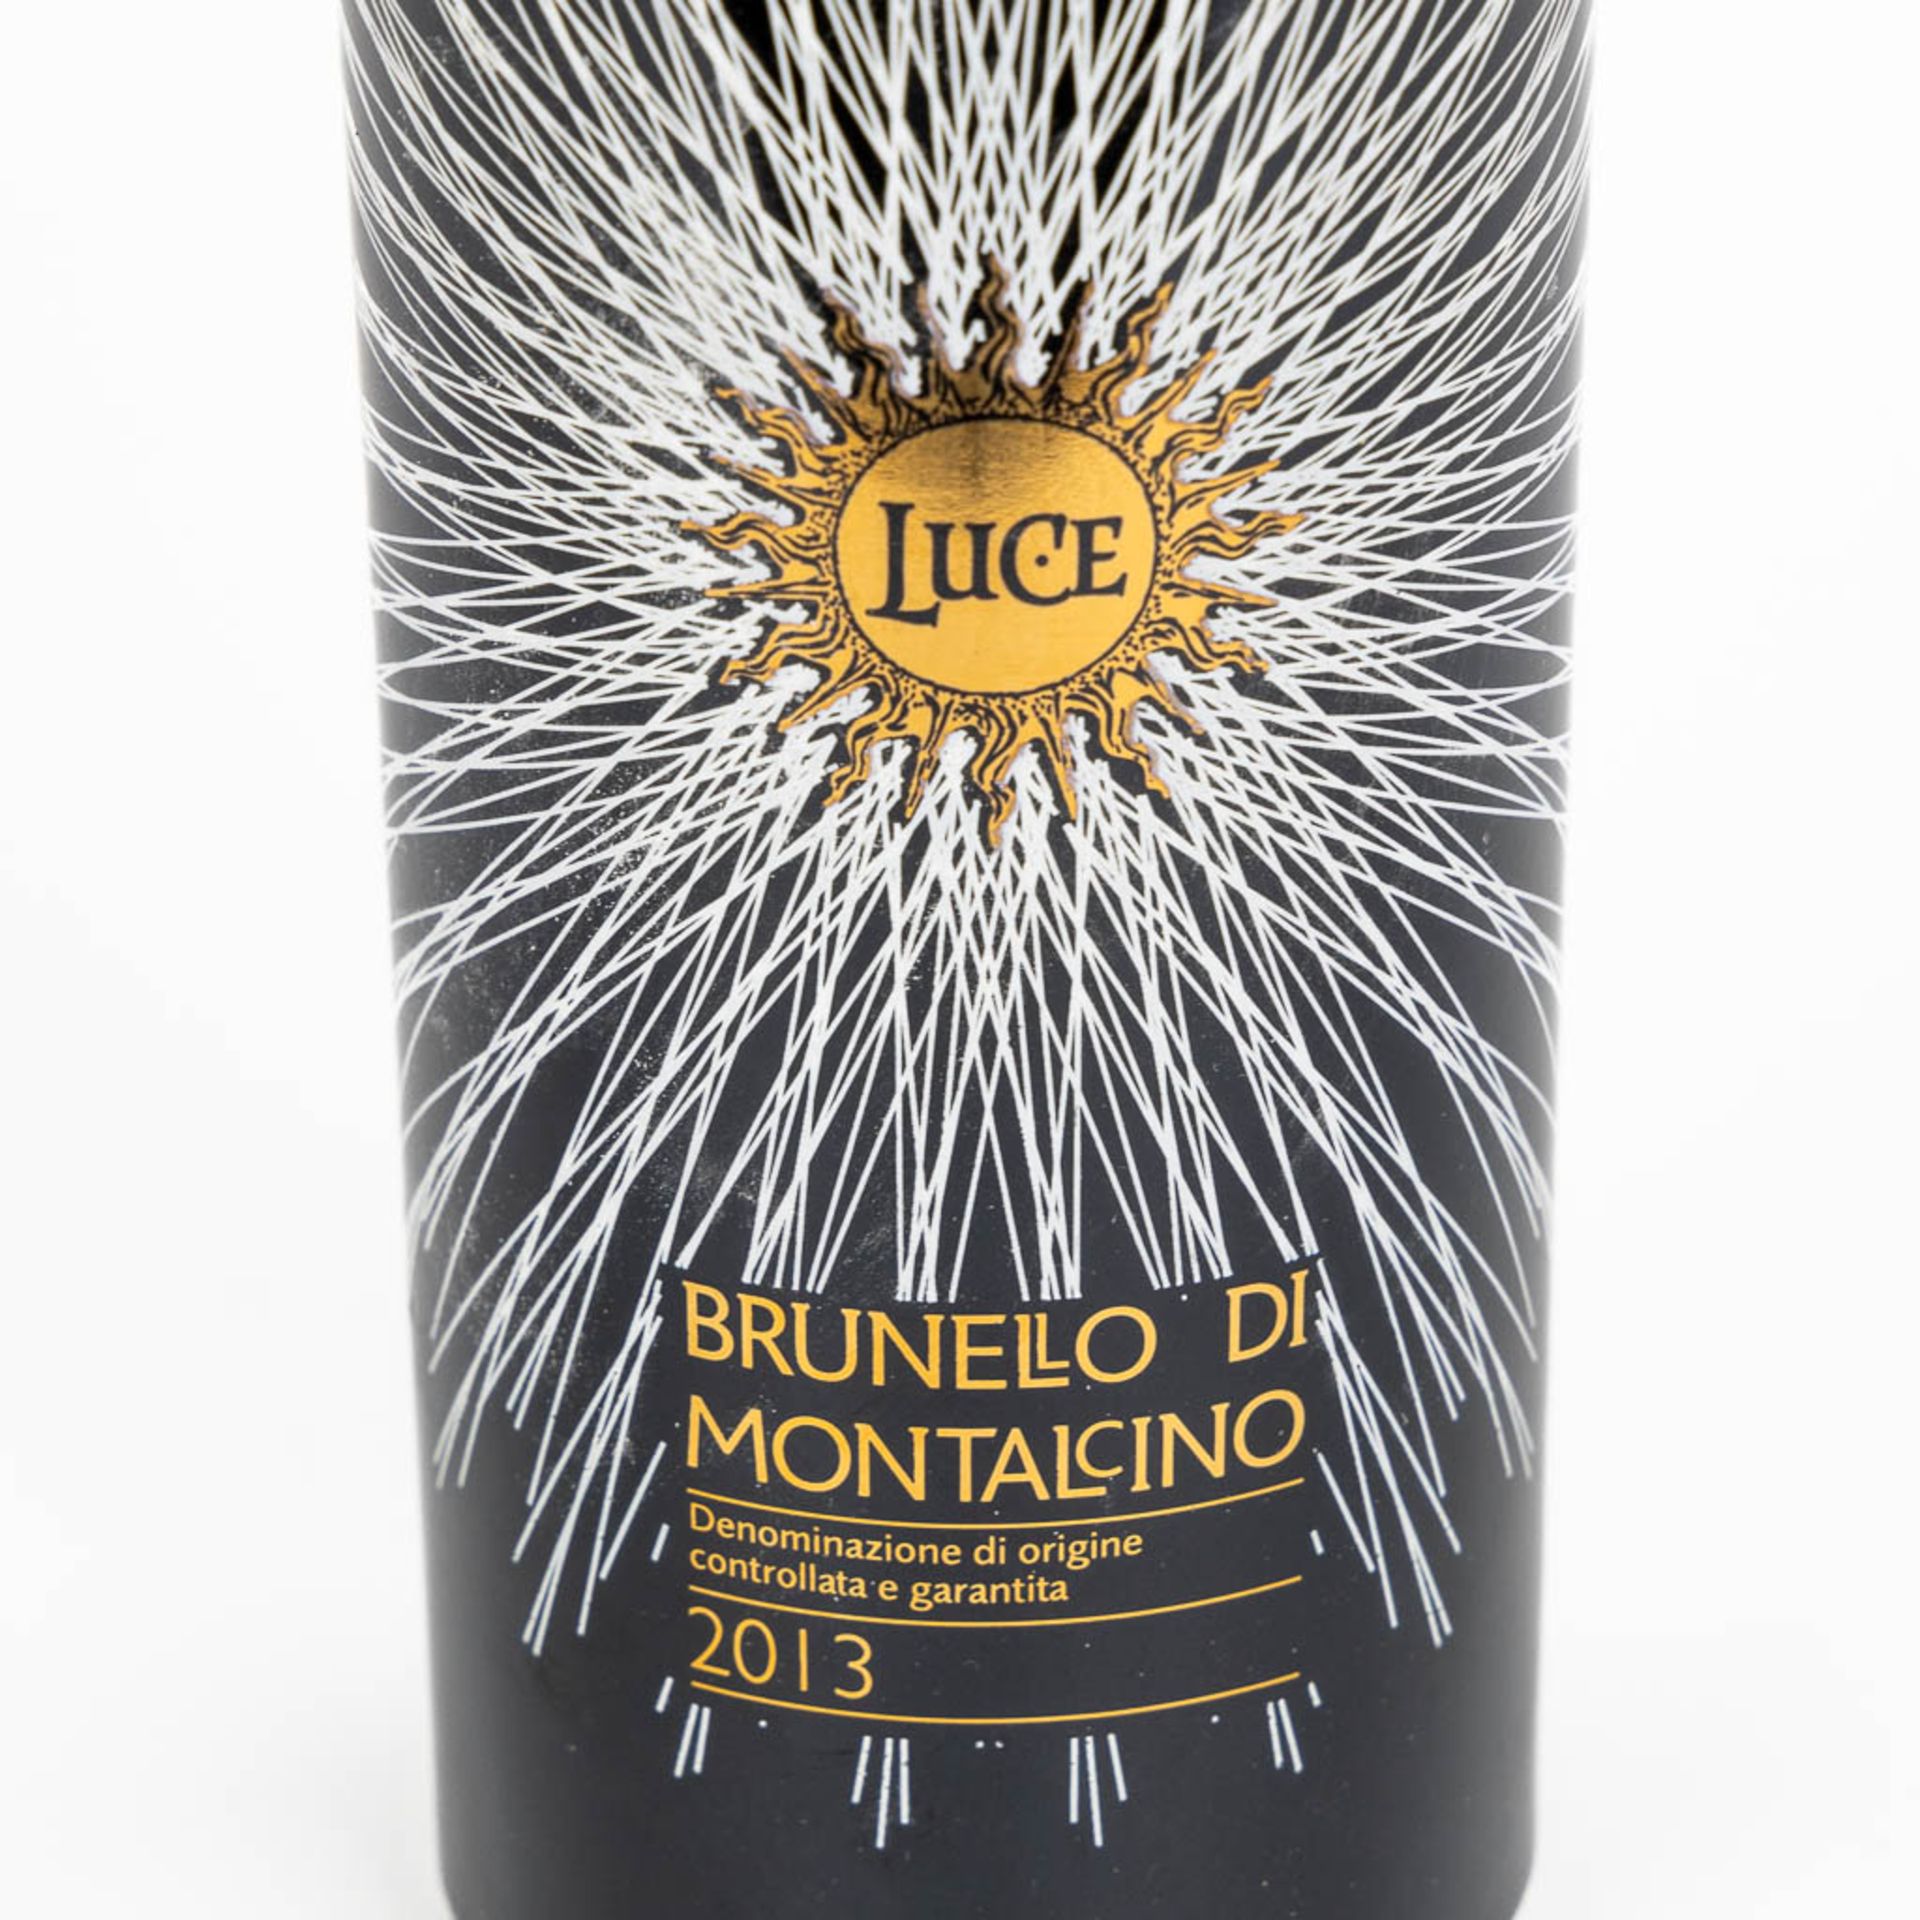 2013 Luce Brunello Di Montalcino (owc), 3 bottles. - Image 6 of 7